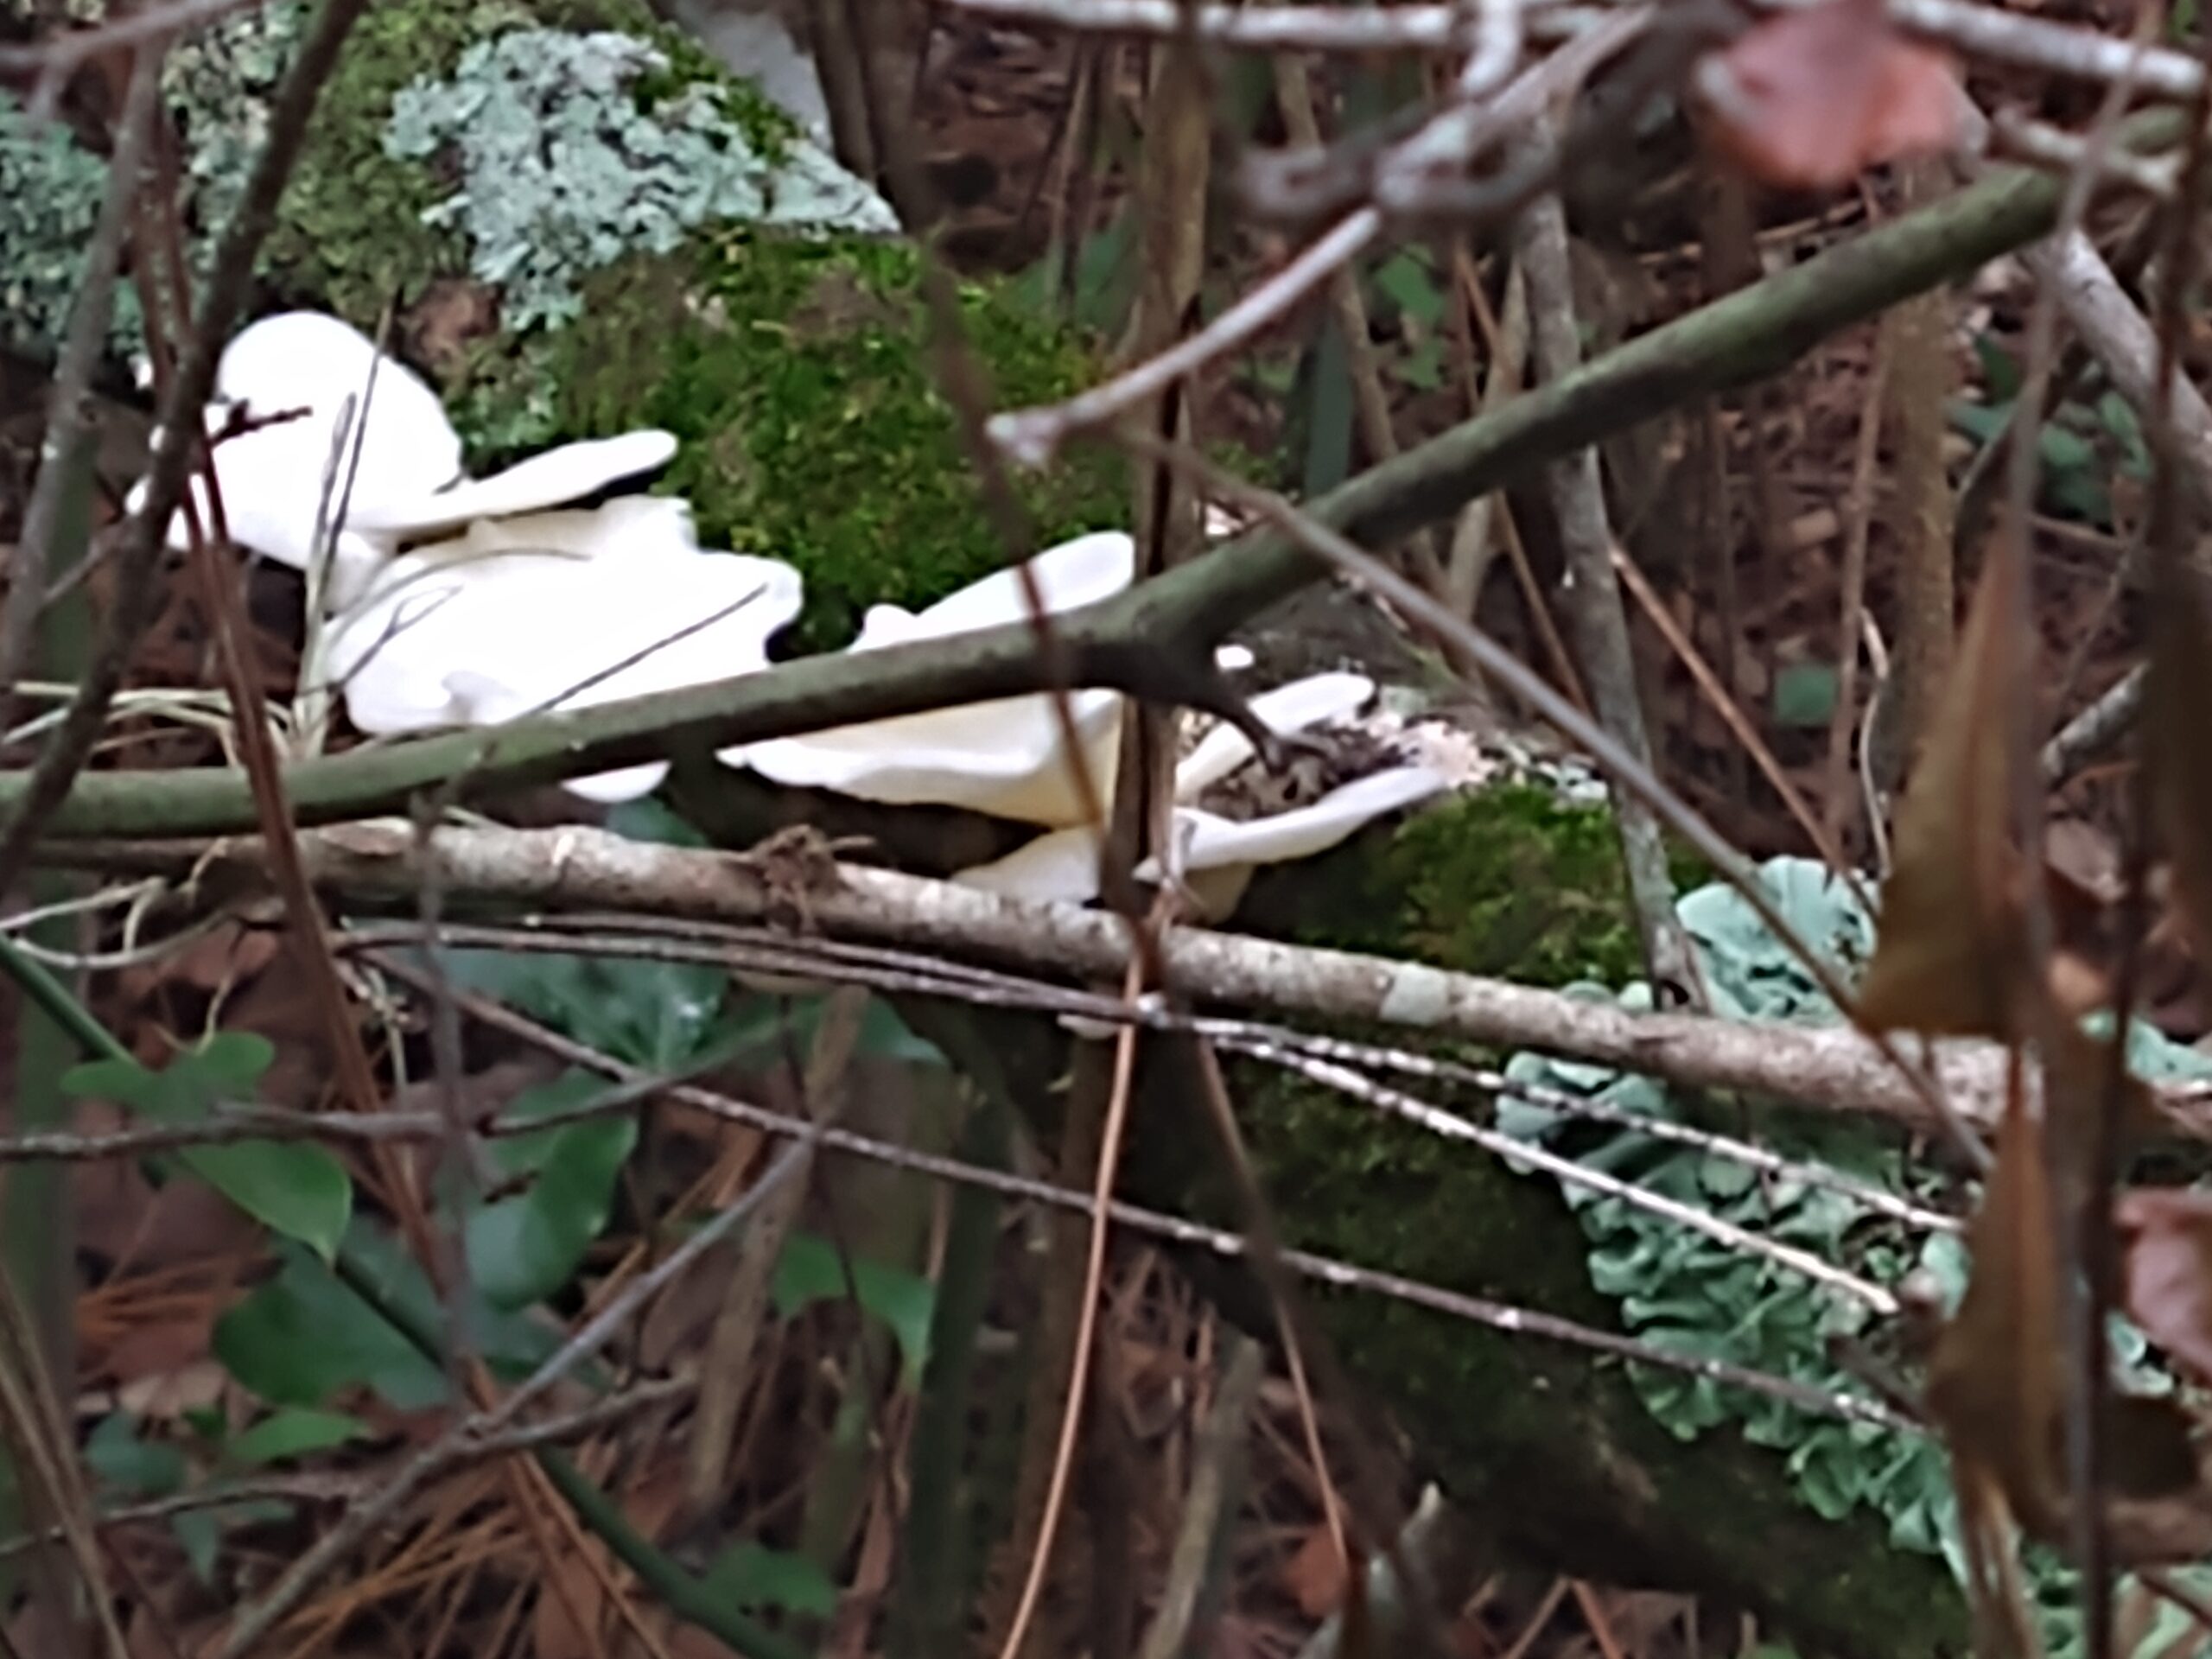 White mushrooms and green moss